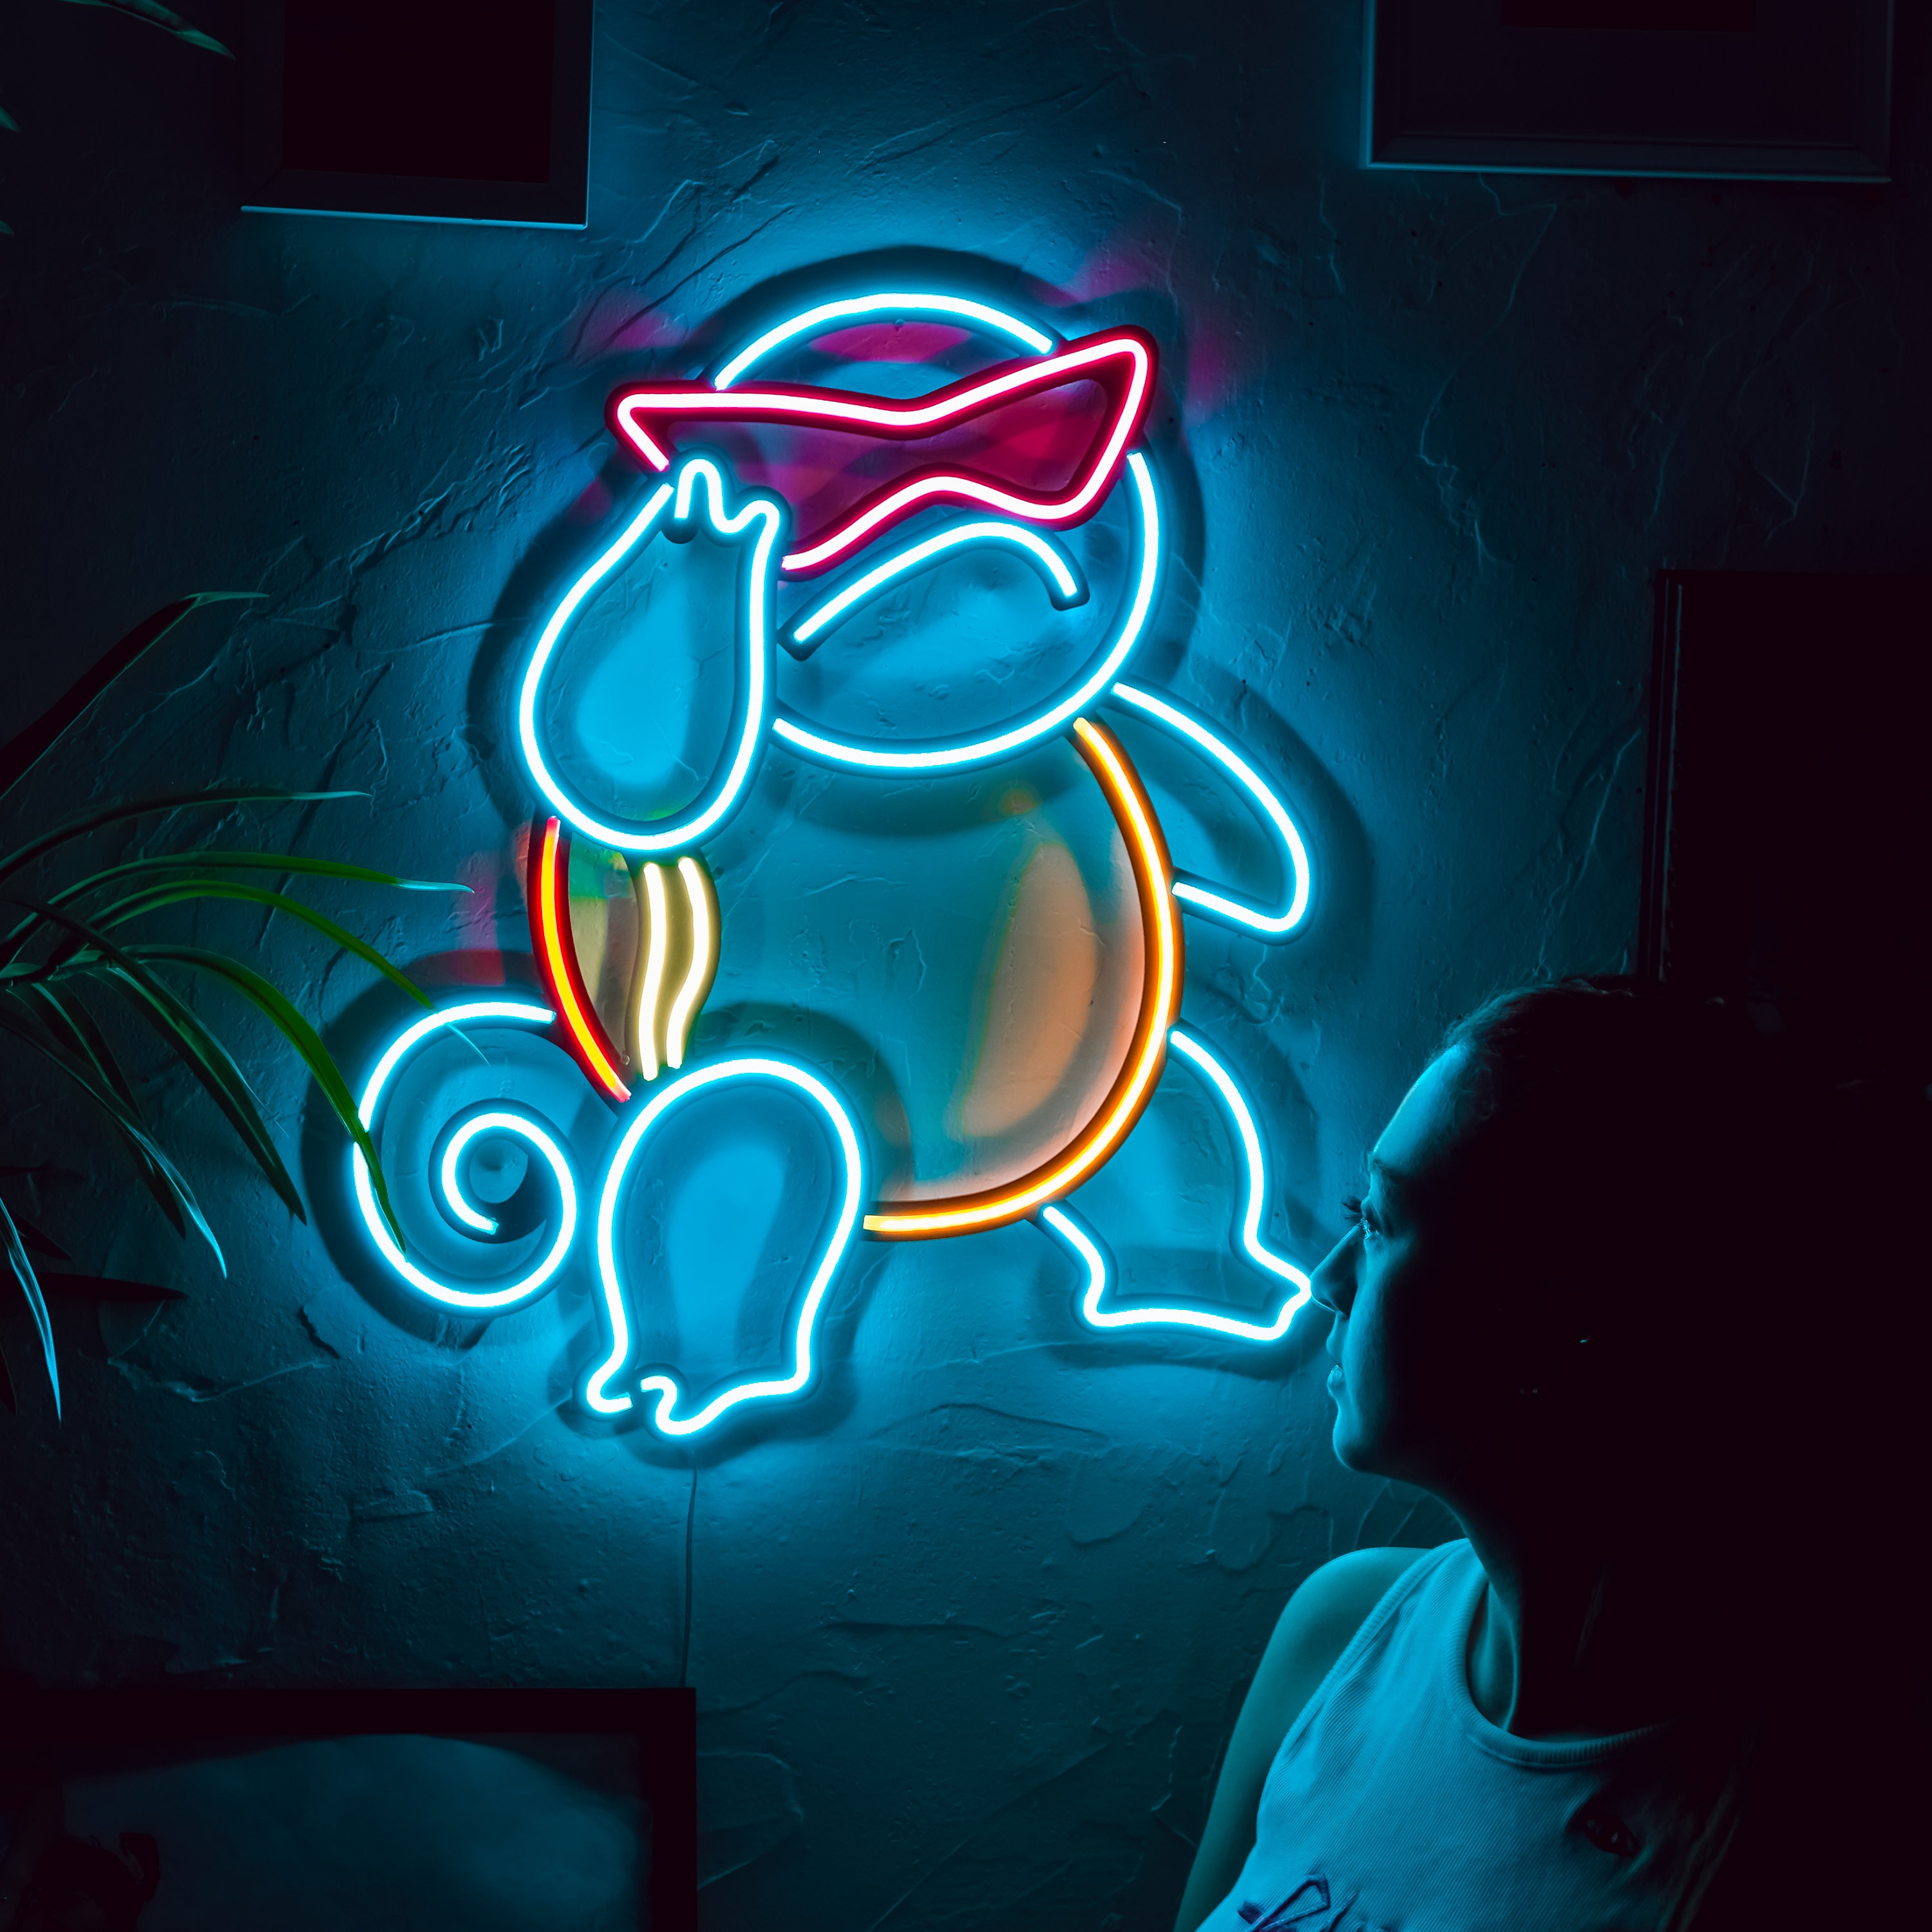 TAXXII LED-Leuchtreklame Willkommen Bunte LED-Leuchtreklame, Ladenbar,  Party-Dekoration, Nachtlampe, Customizable Neon Signs, Hintergrund, Schild,  Wandbehang, Beleuchtung, 68 x 24 cm : : Lighting